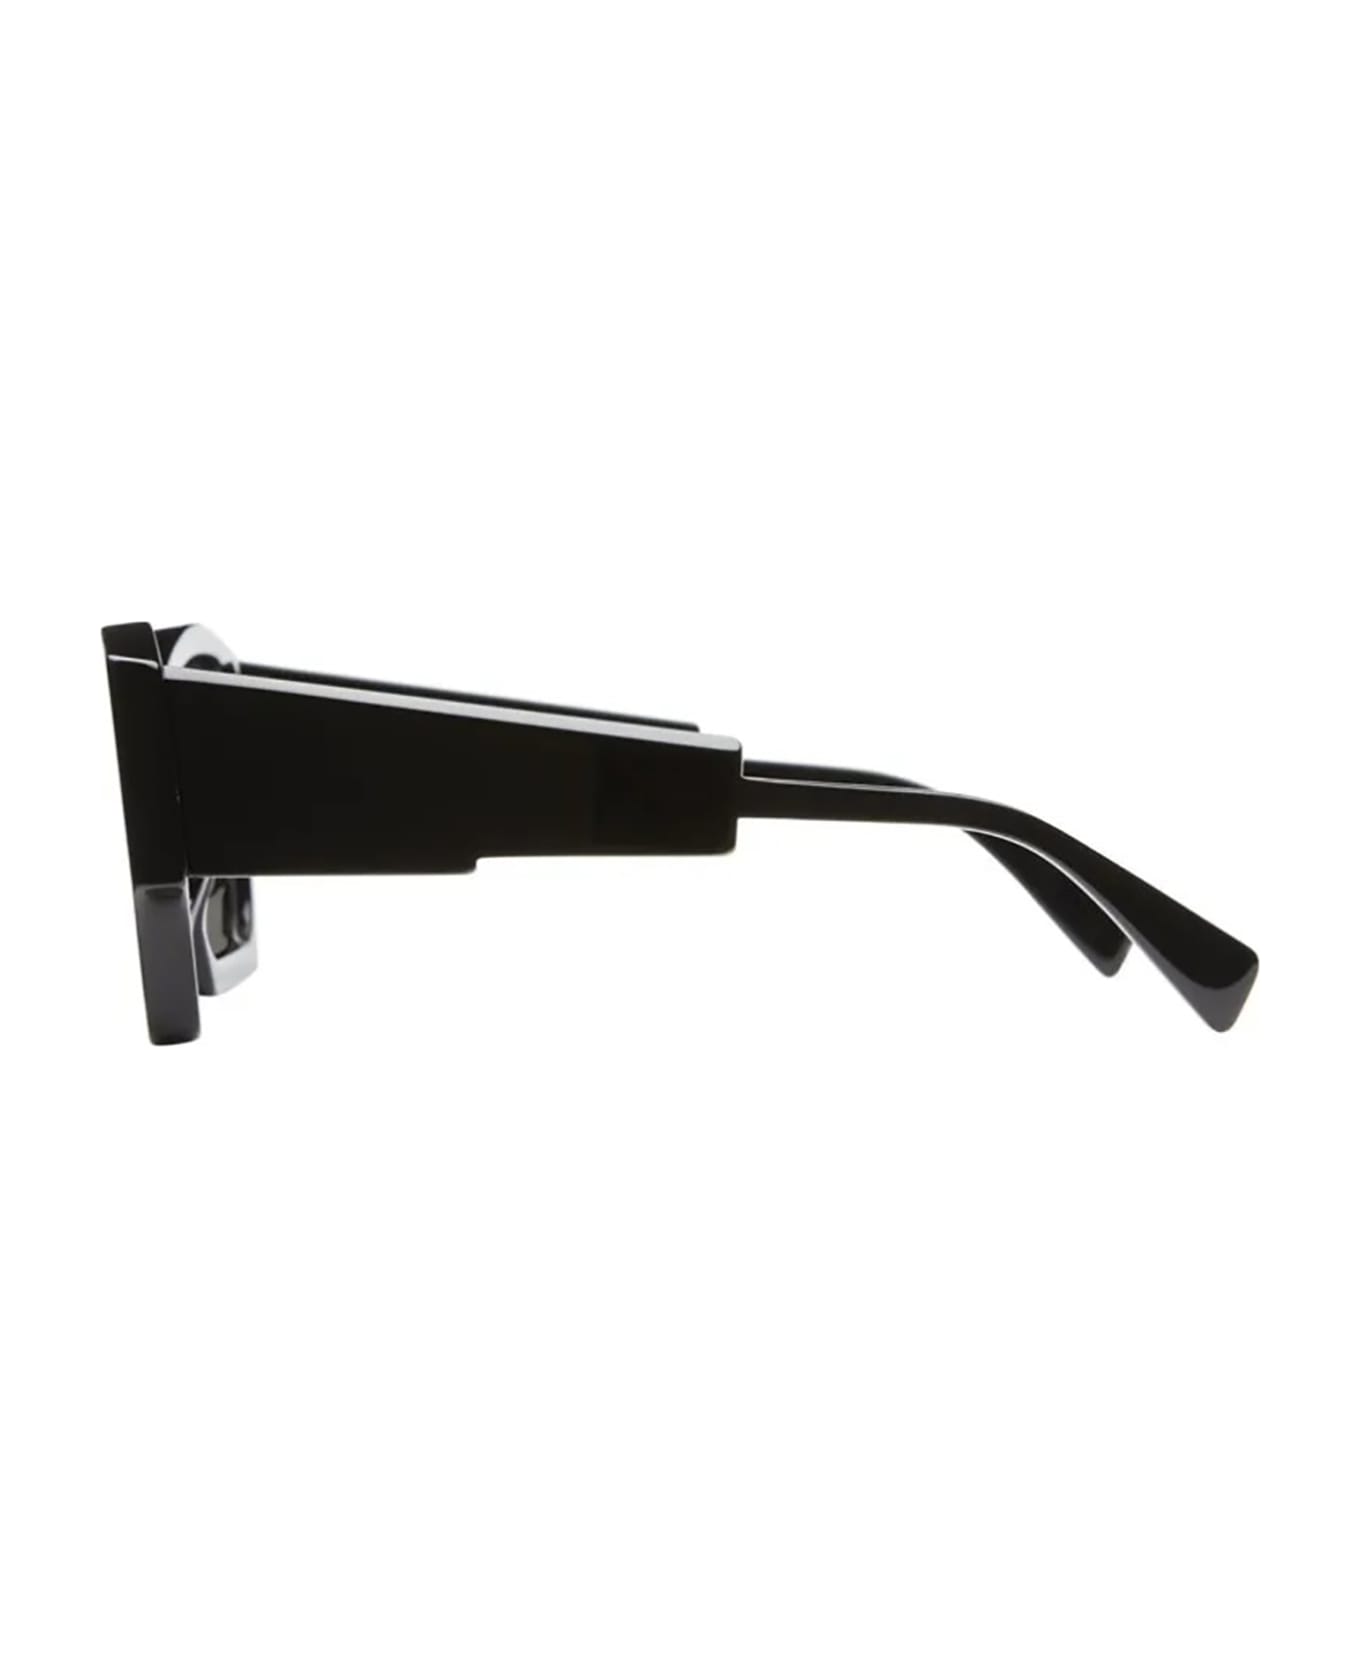 Kuboraum X6 Favourites Sunglasses - Bs